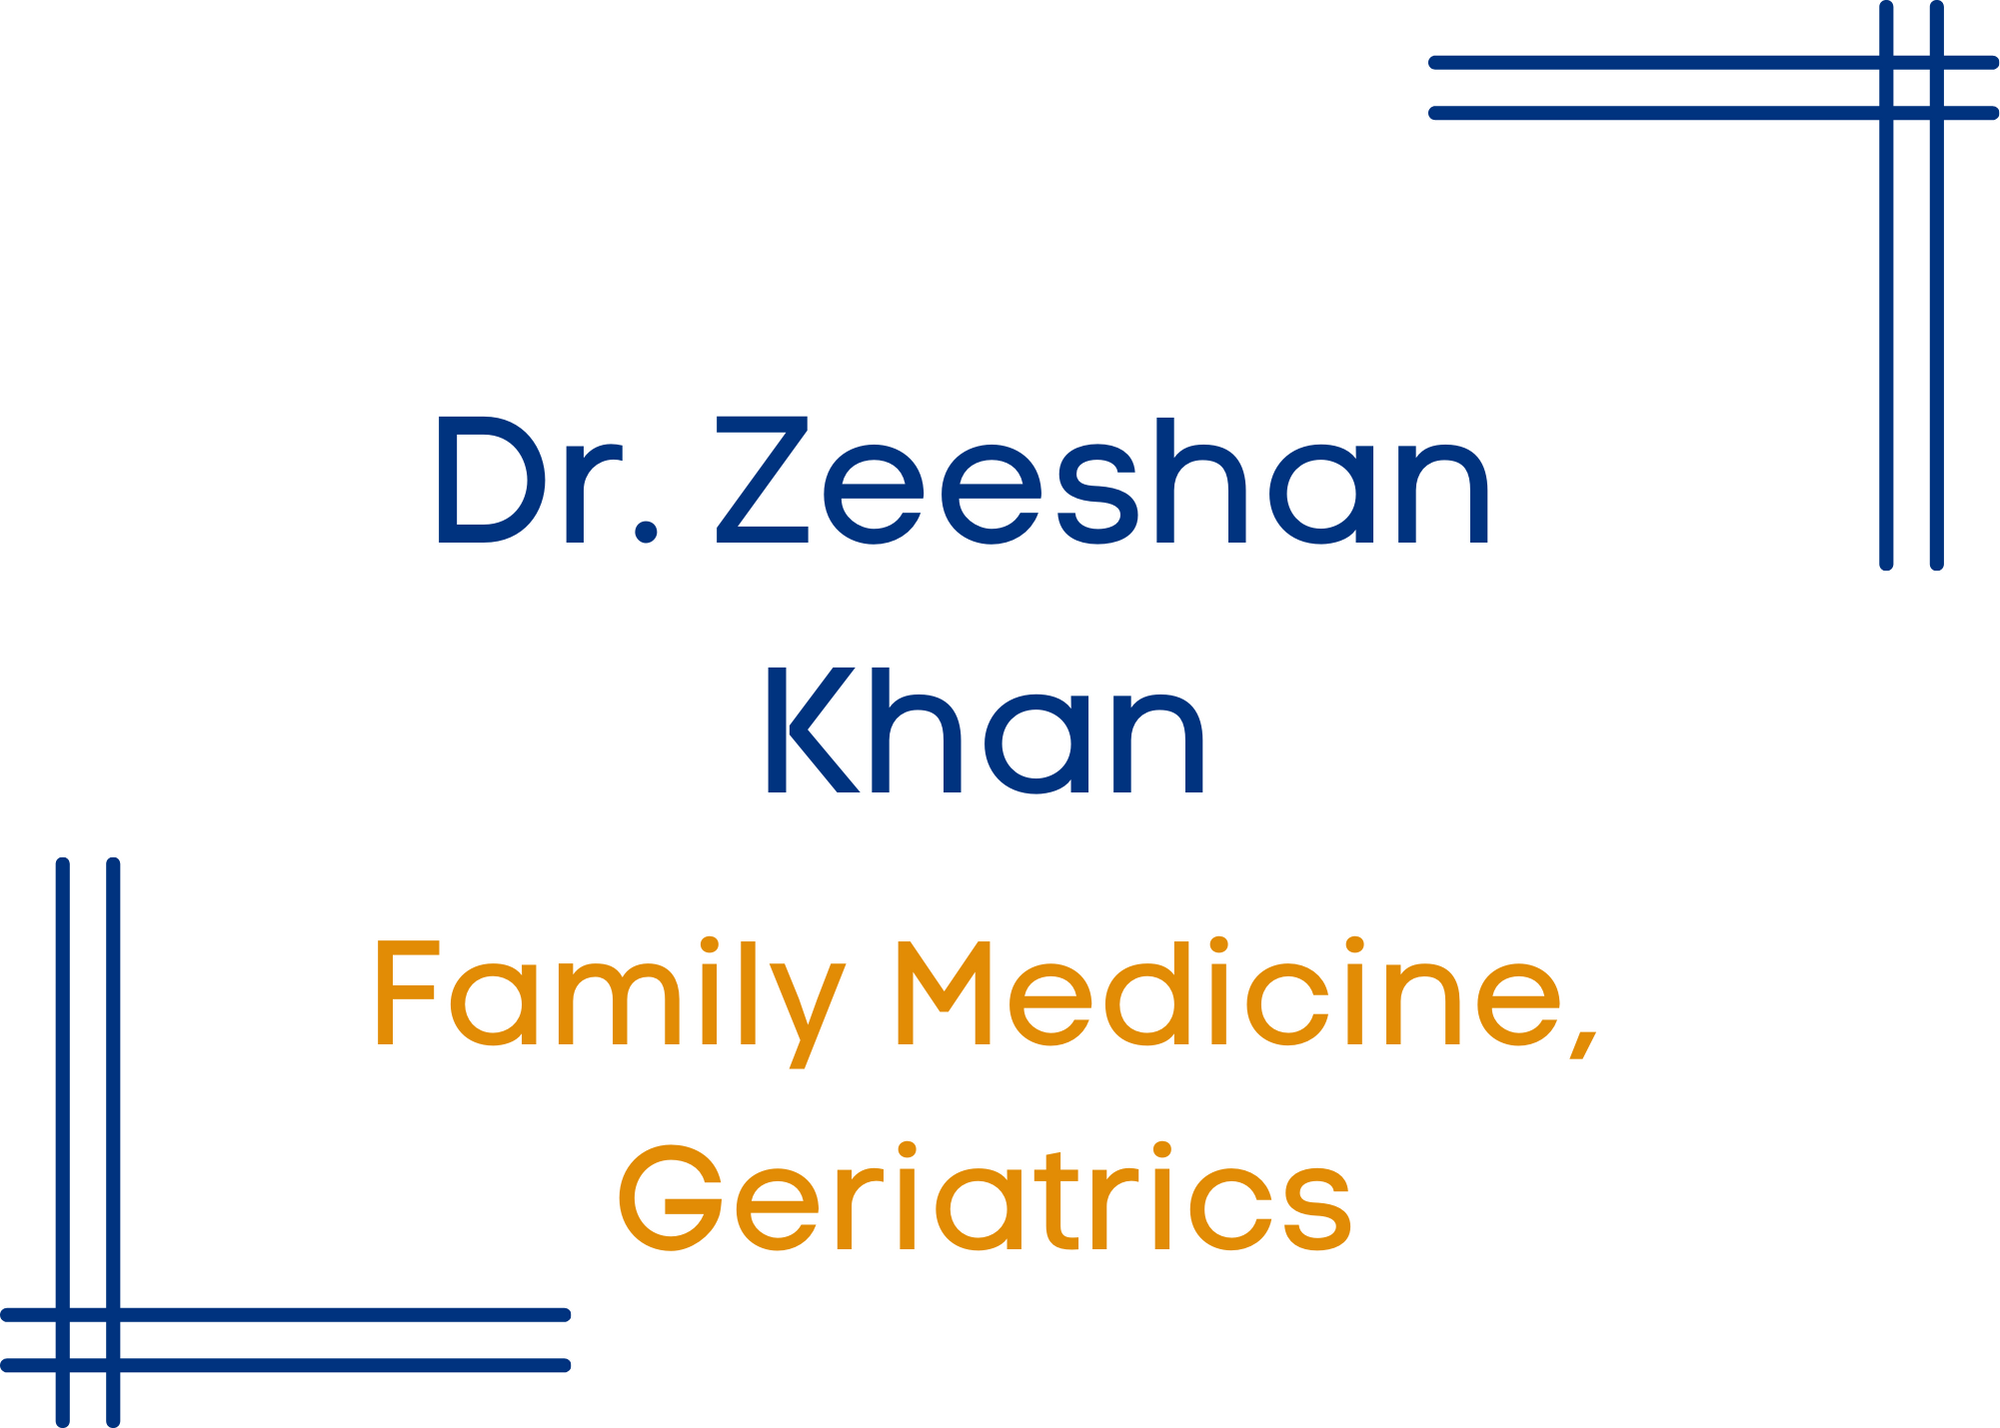 dr zeeshan khan